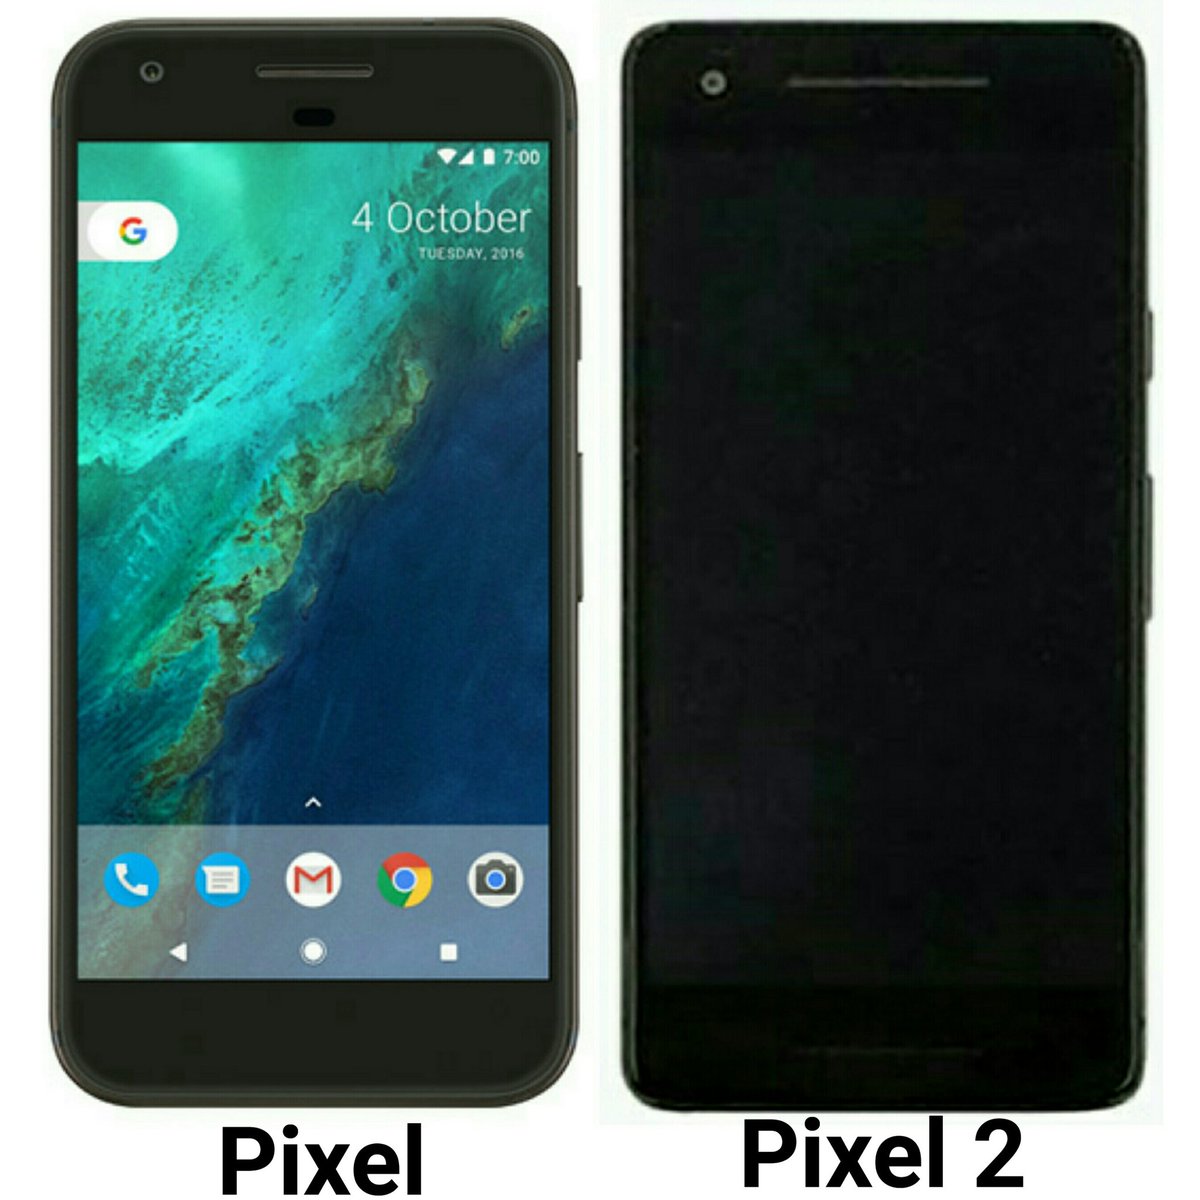 Google to Unveil Next Generation Pixel Smartphones on October 4th [Video]